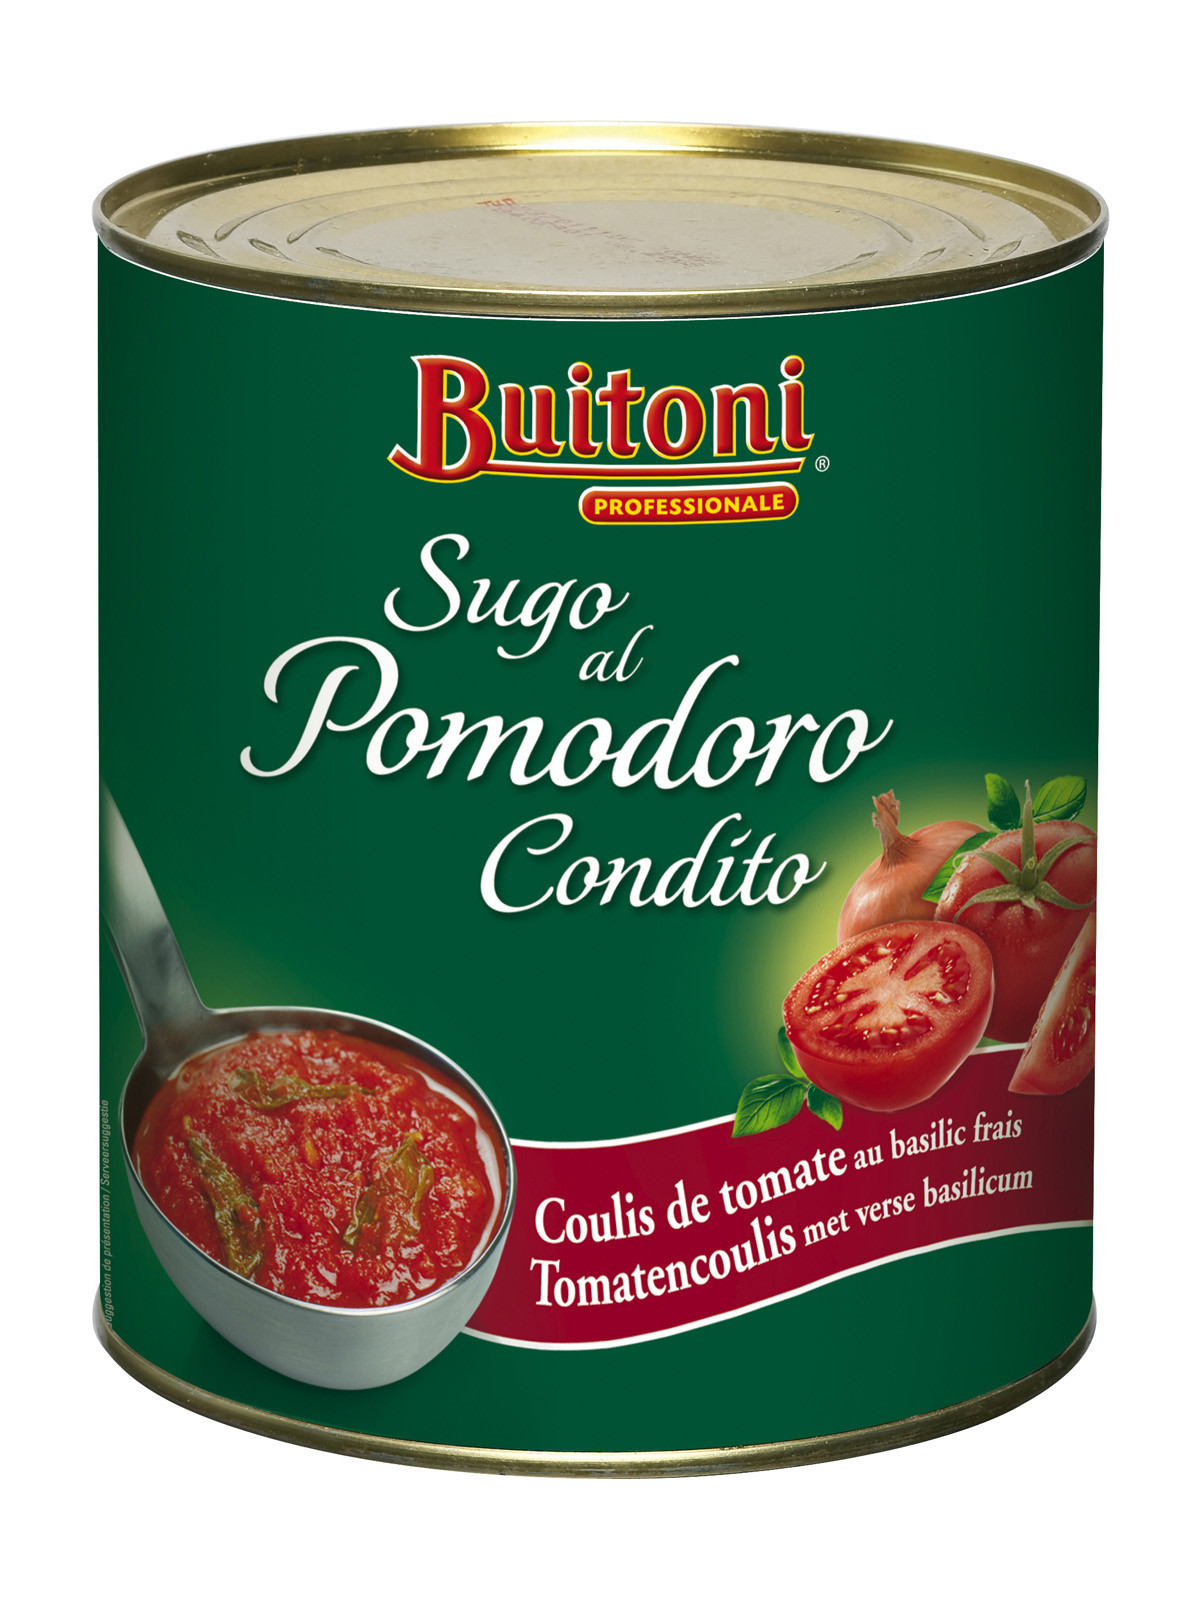 Buitoni Tomatencoulis Sugo al Pomodoro condito 2.5kg blik